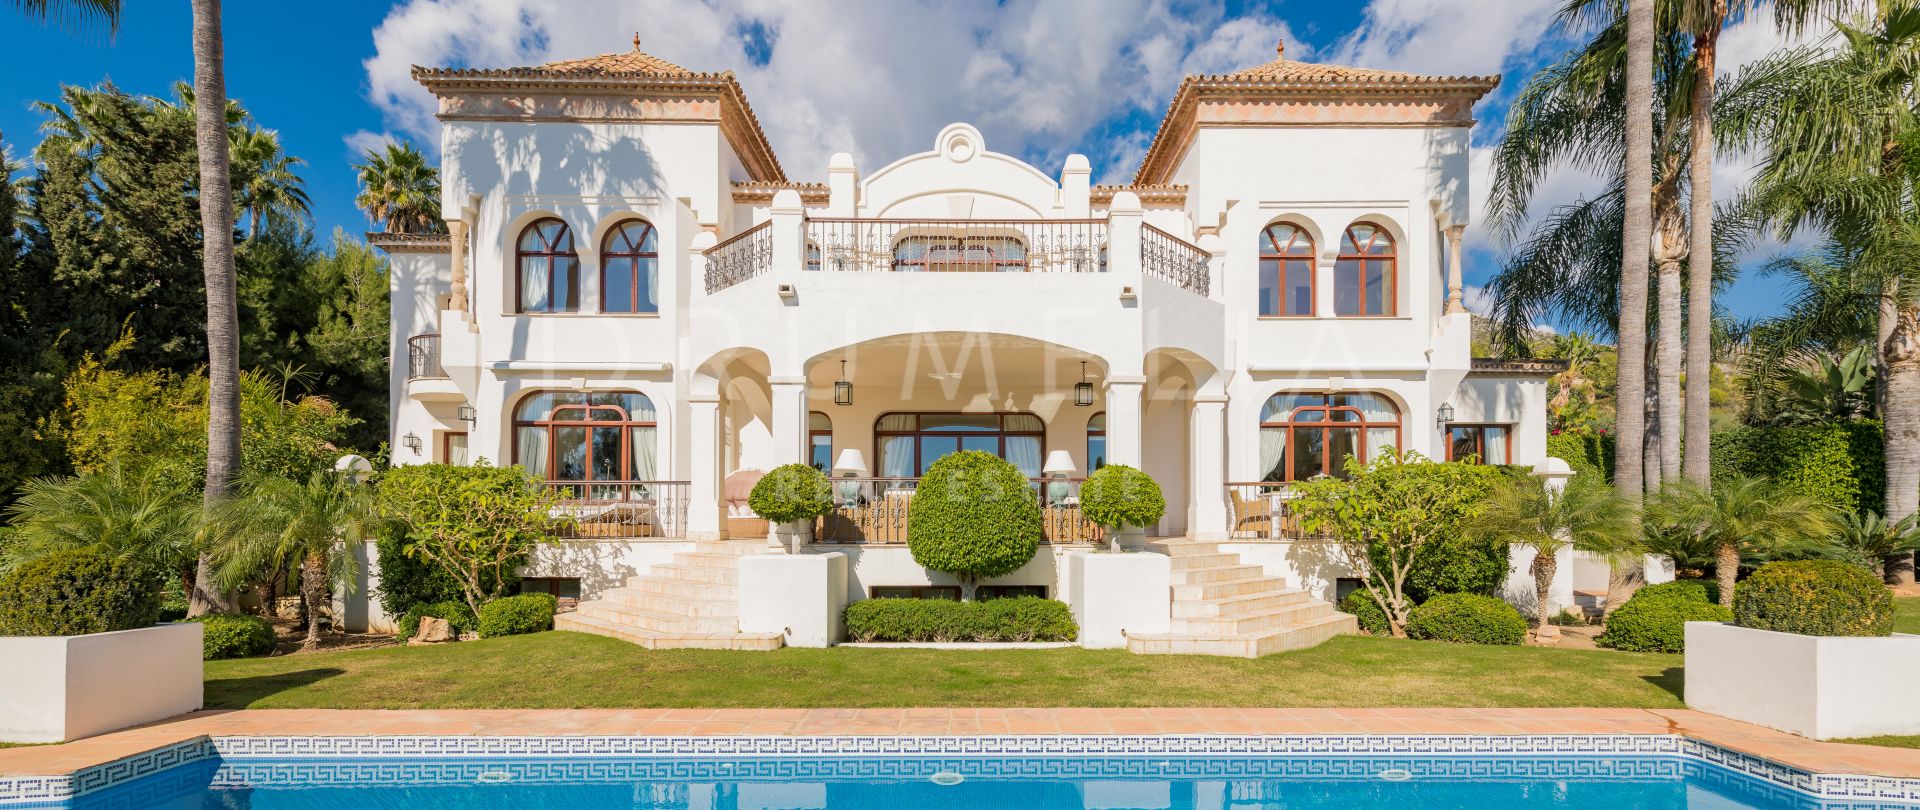 Hervorragende klassische mediterrane Luxusvilla, Sierra Blanca, Goldene Meile